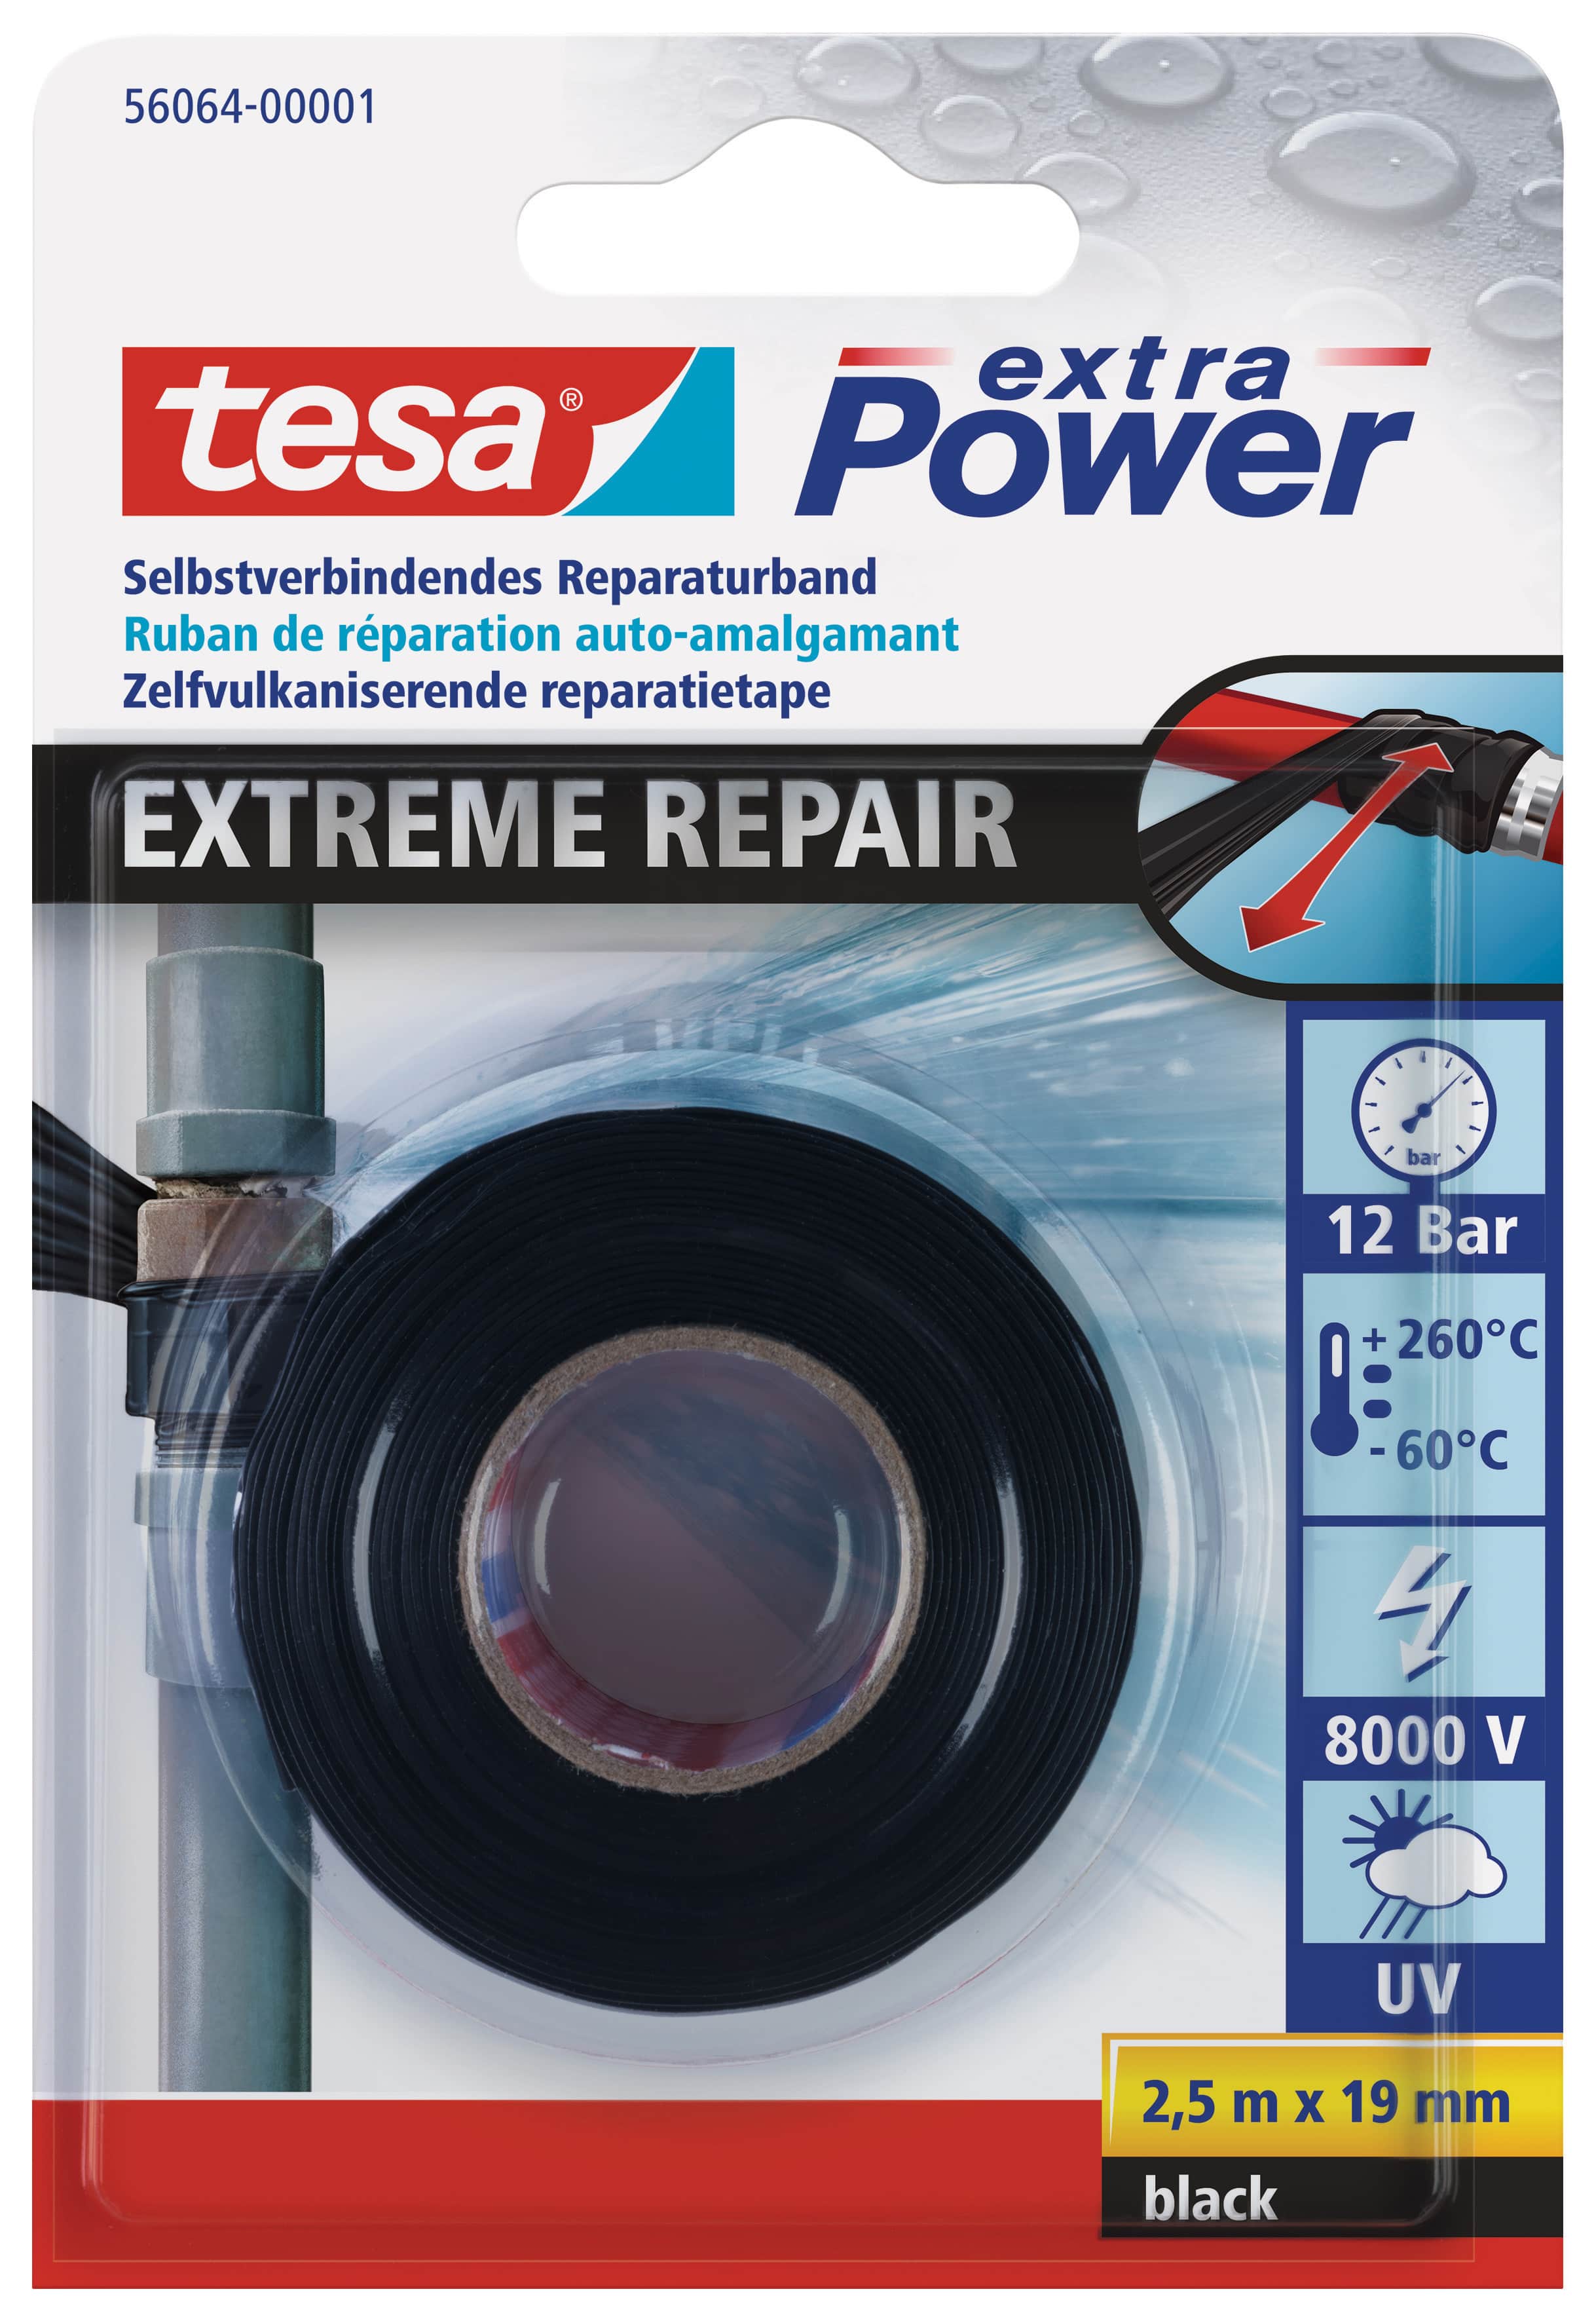 TESA extra Power Extreme Repair, Reparaturband, 19 mm x 2,5 m, schwarz